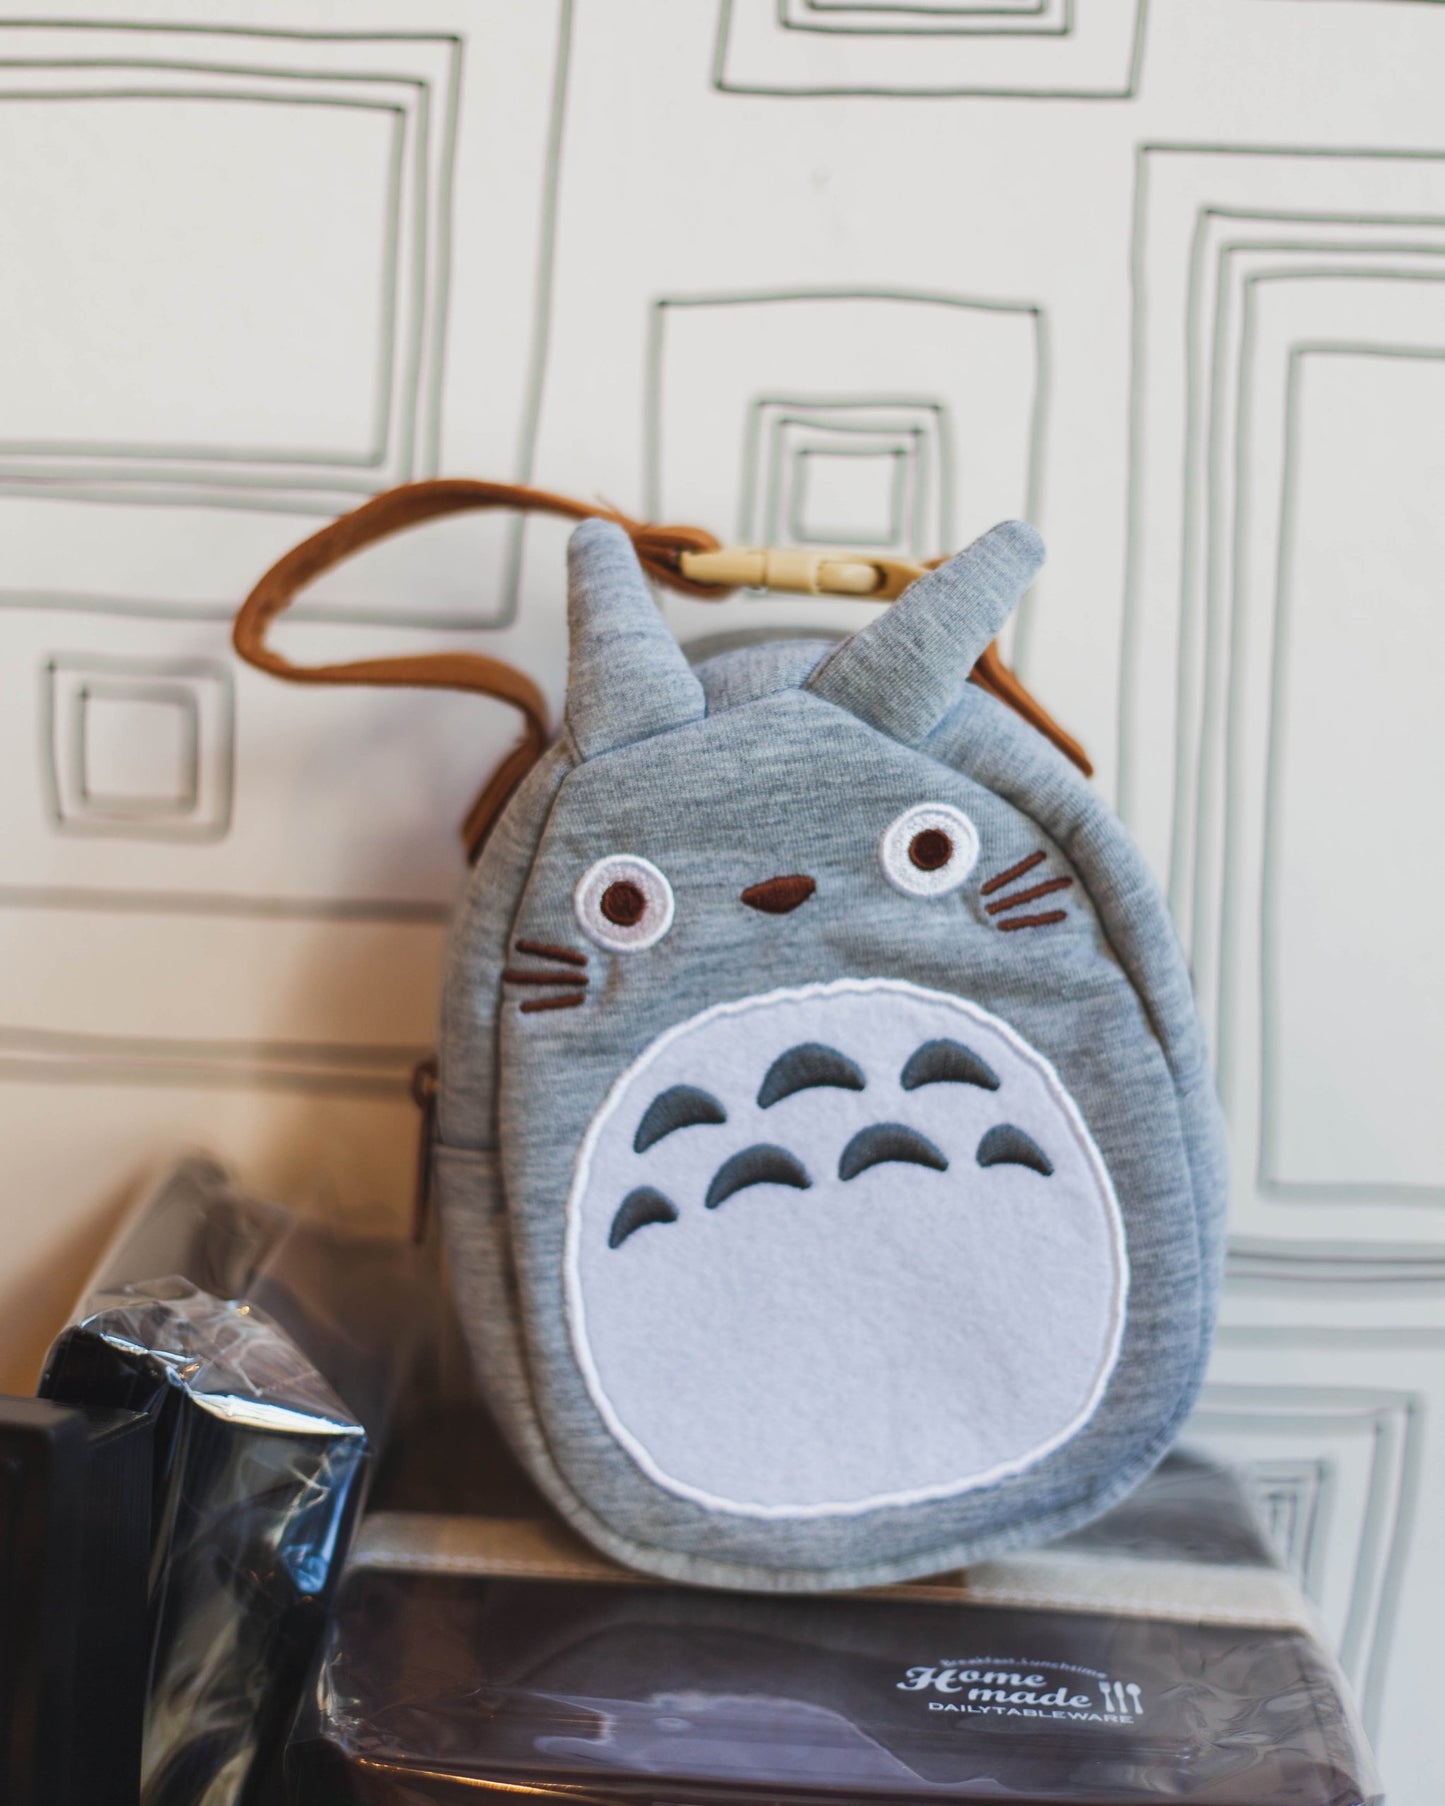 Totoro Die-Cut Small Purse